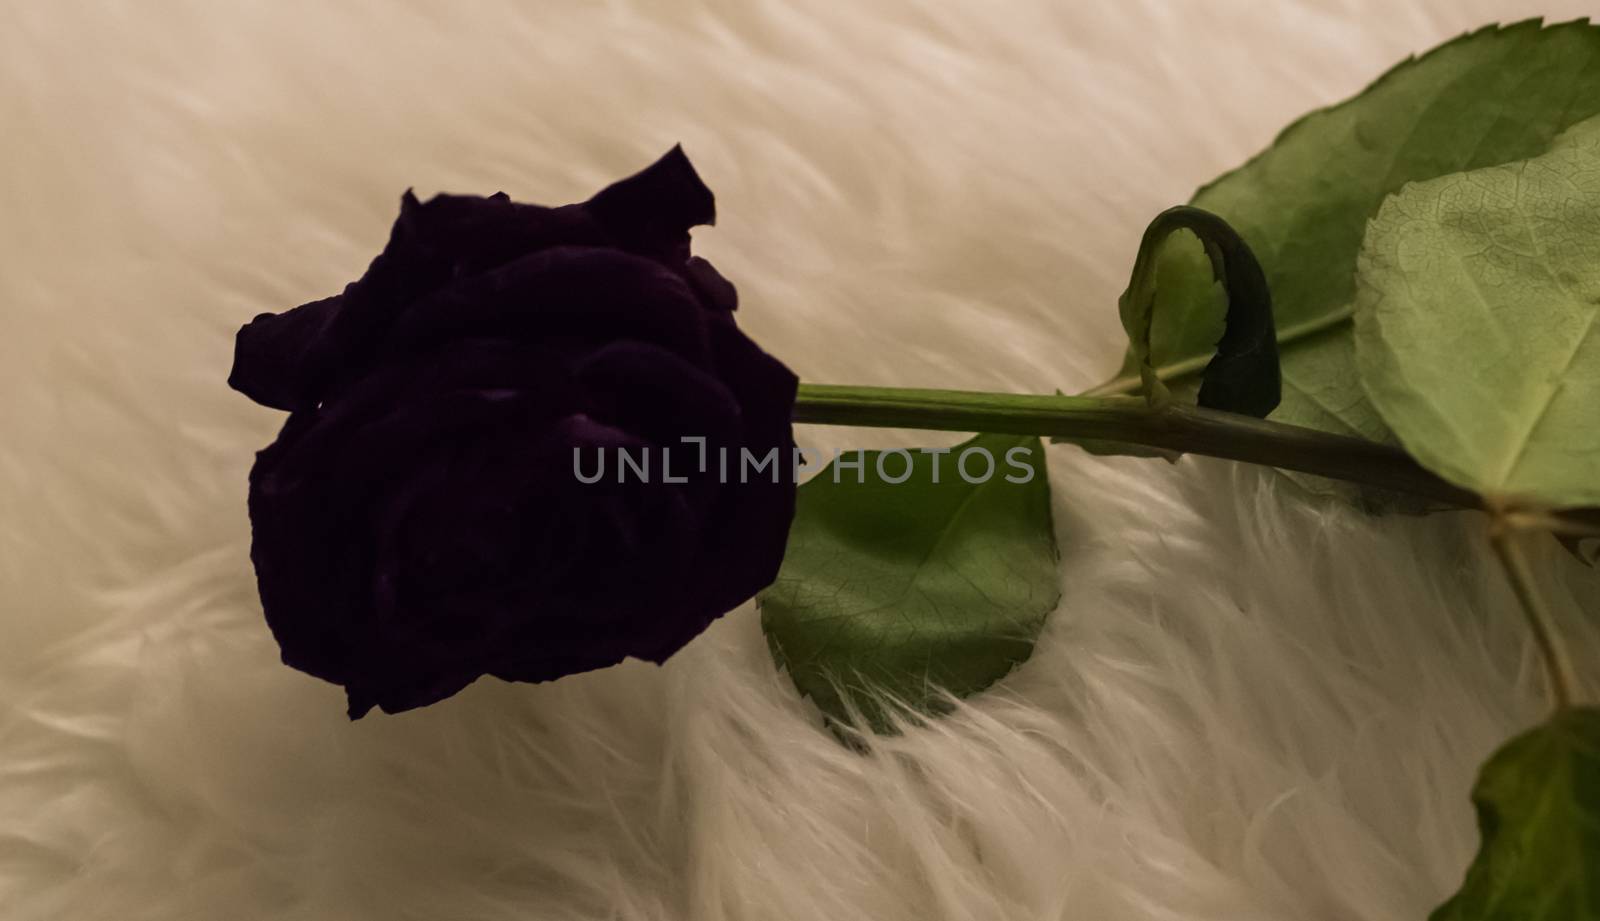 Gothic valentines day gift a dark black rose a strange way to express love